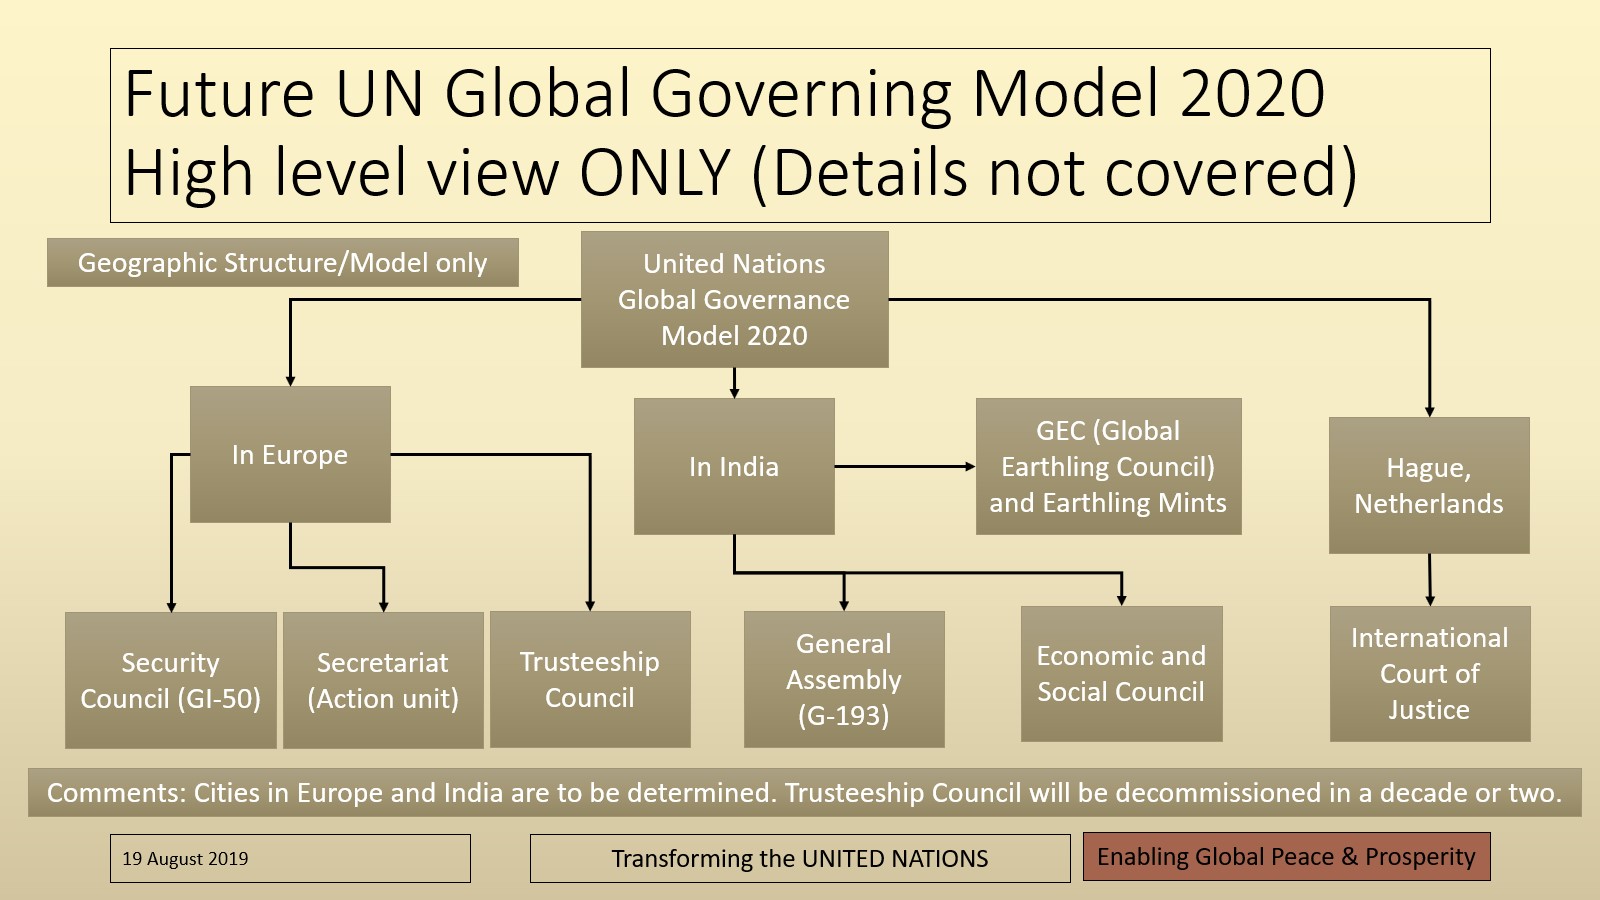 global governance examples